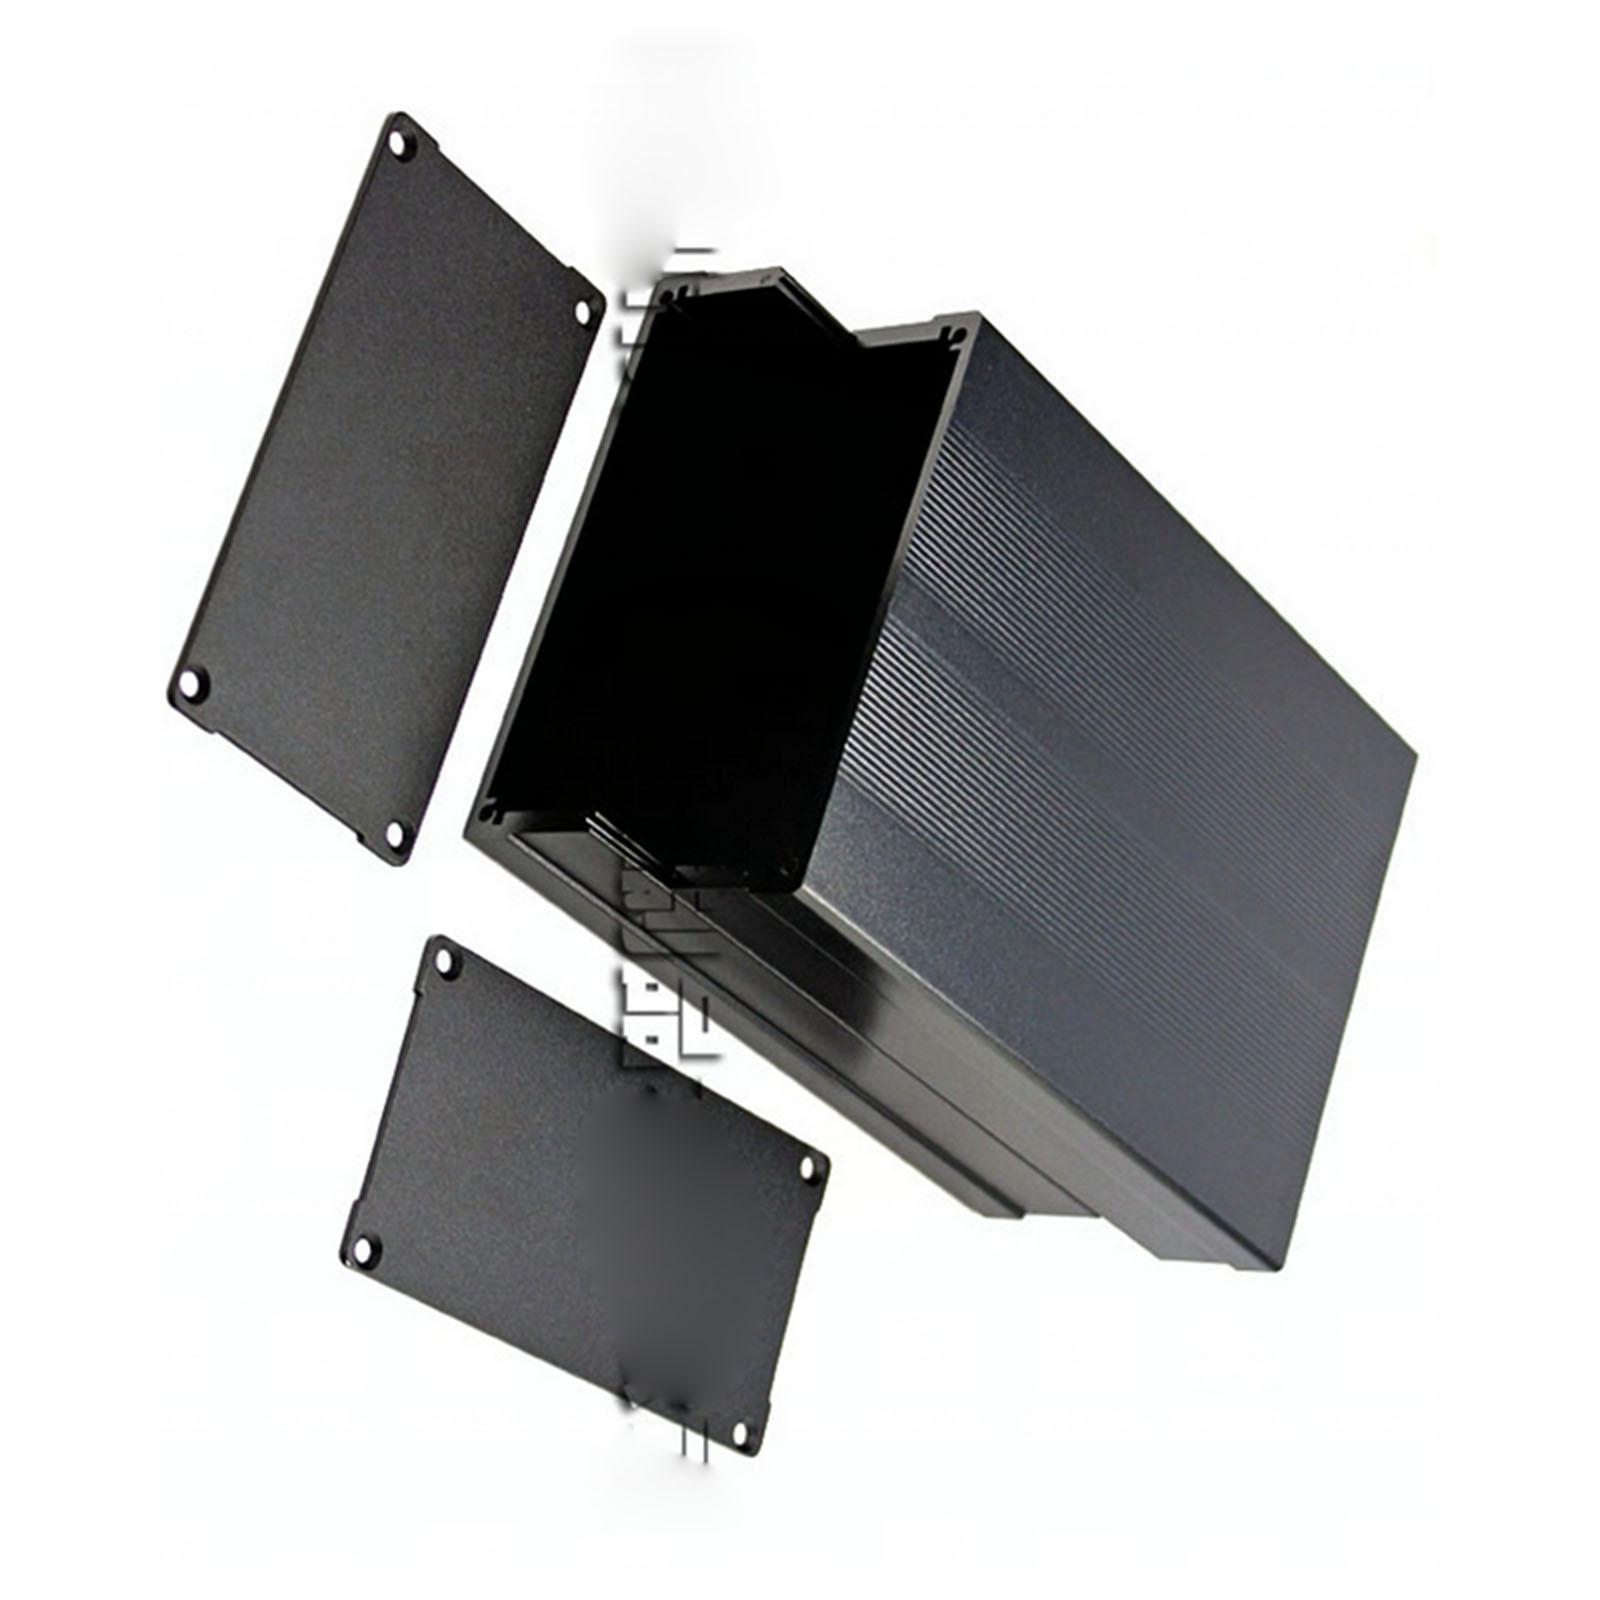 150x105x55mm Aluminum Enclosure PCB Shell Cooling Box Case Split Type